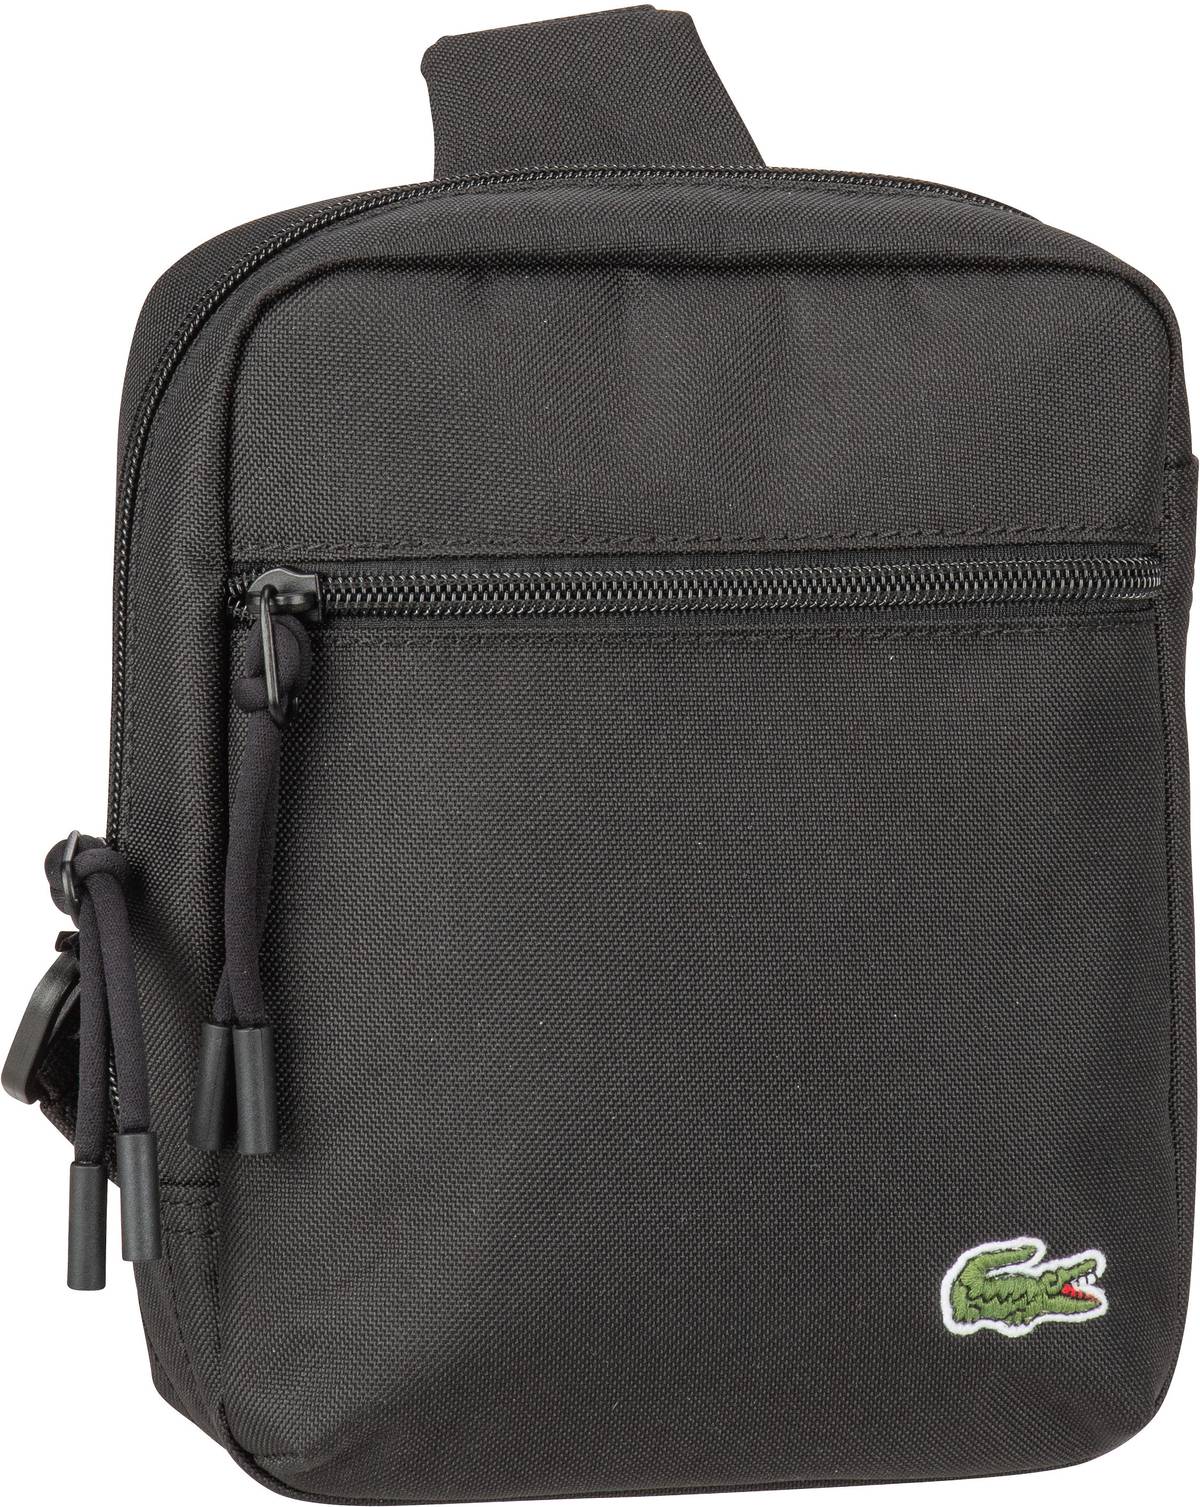 Lacoste Neocroc Body Bag S 4100 - Black